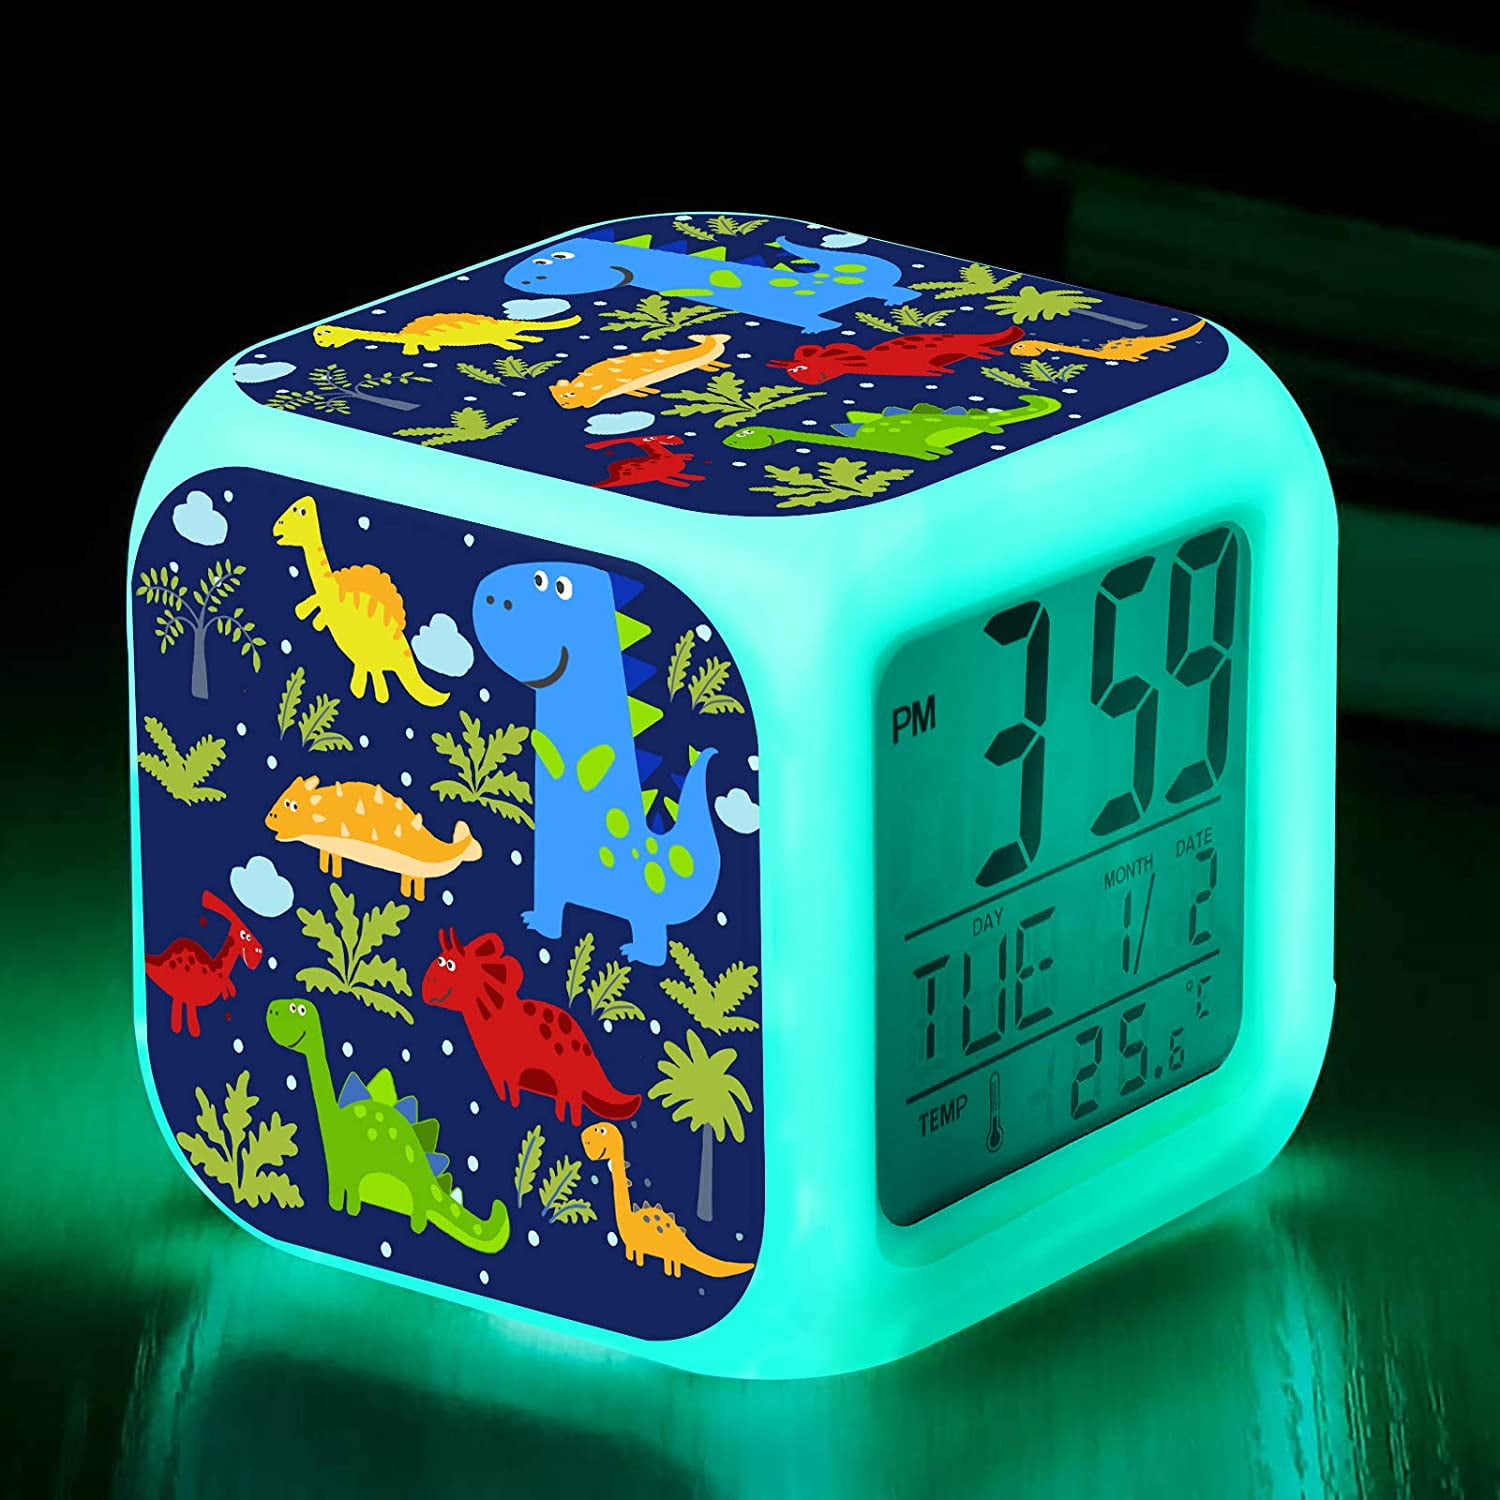 LED Digital Glowing Cube Alarm Clock Night Light For Bedroom Child Kids Gift Hot 